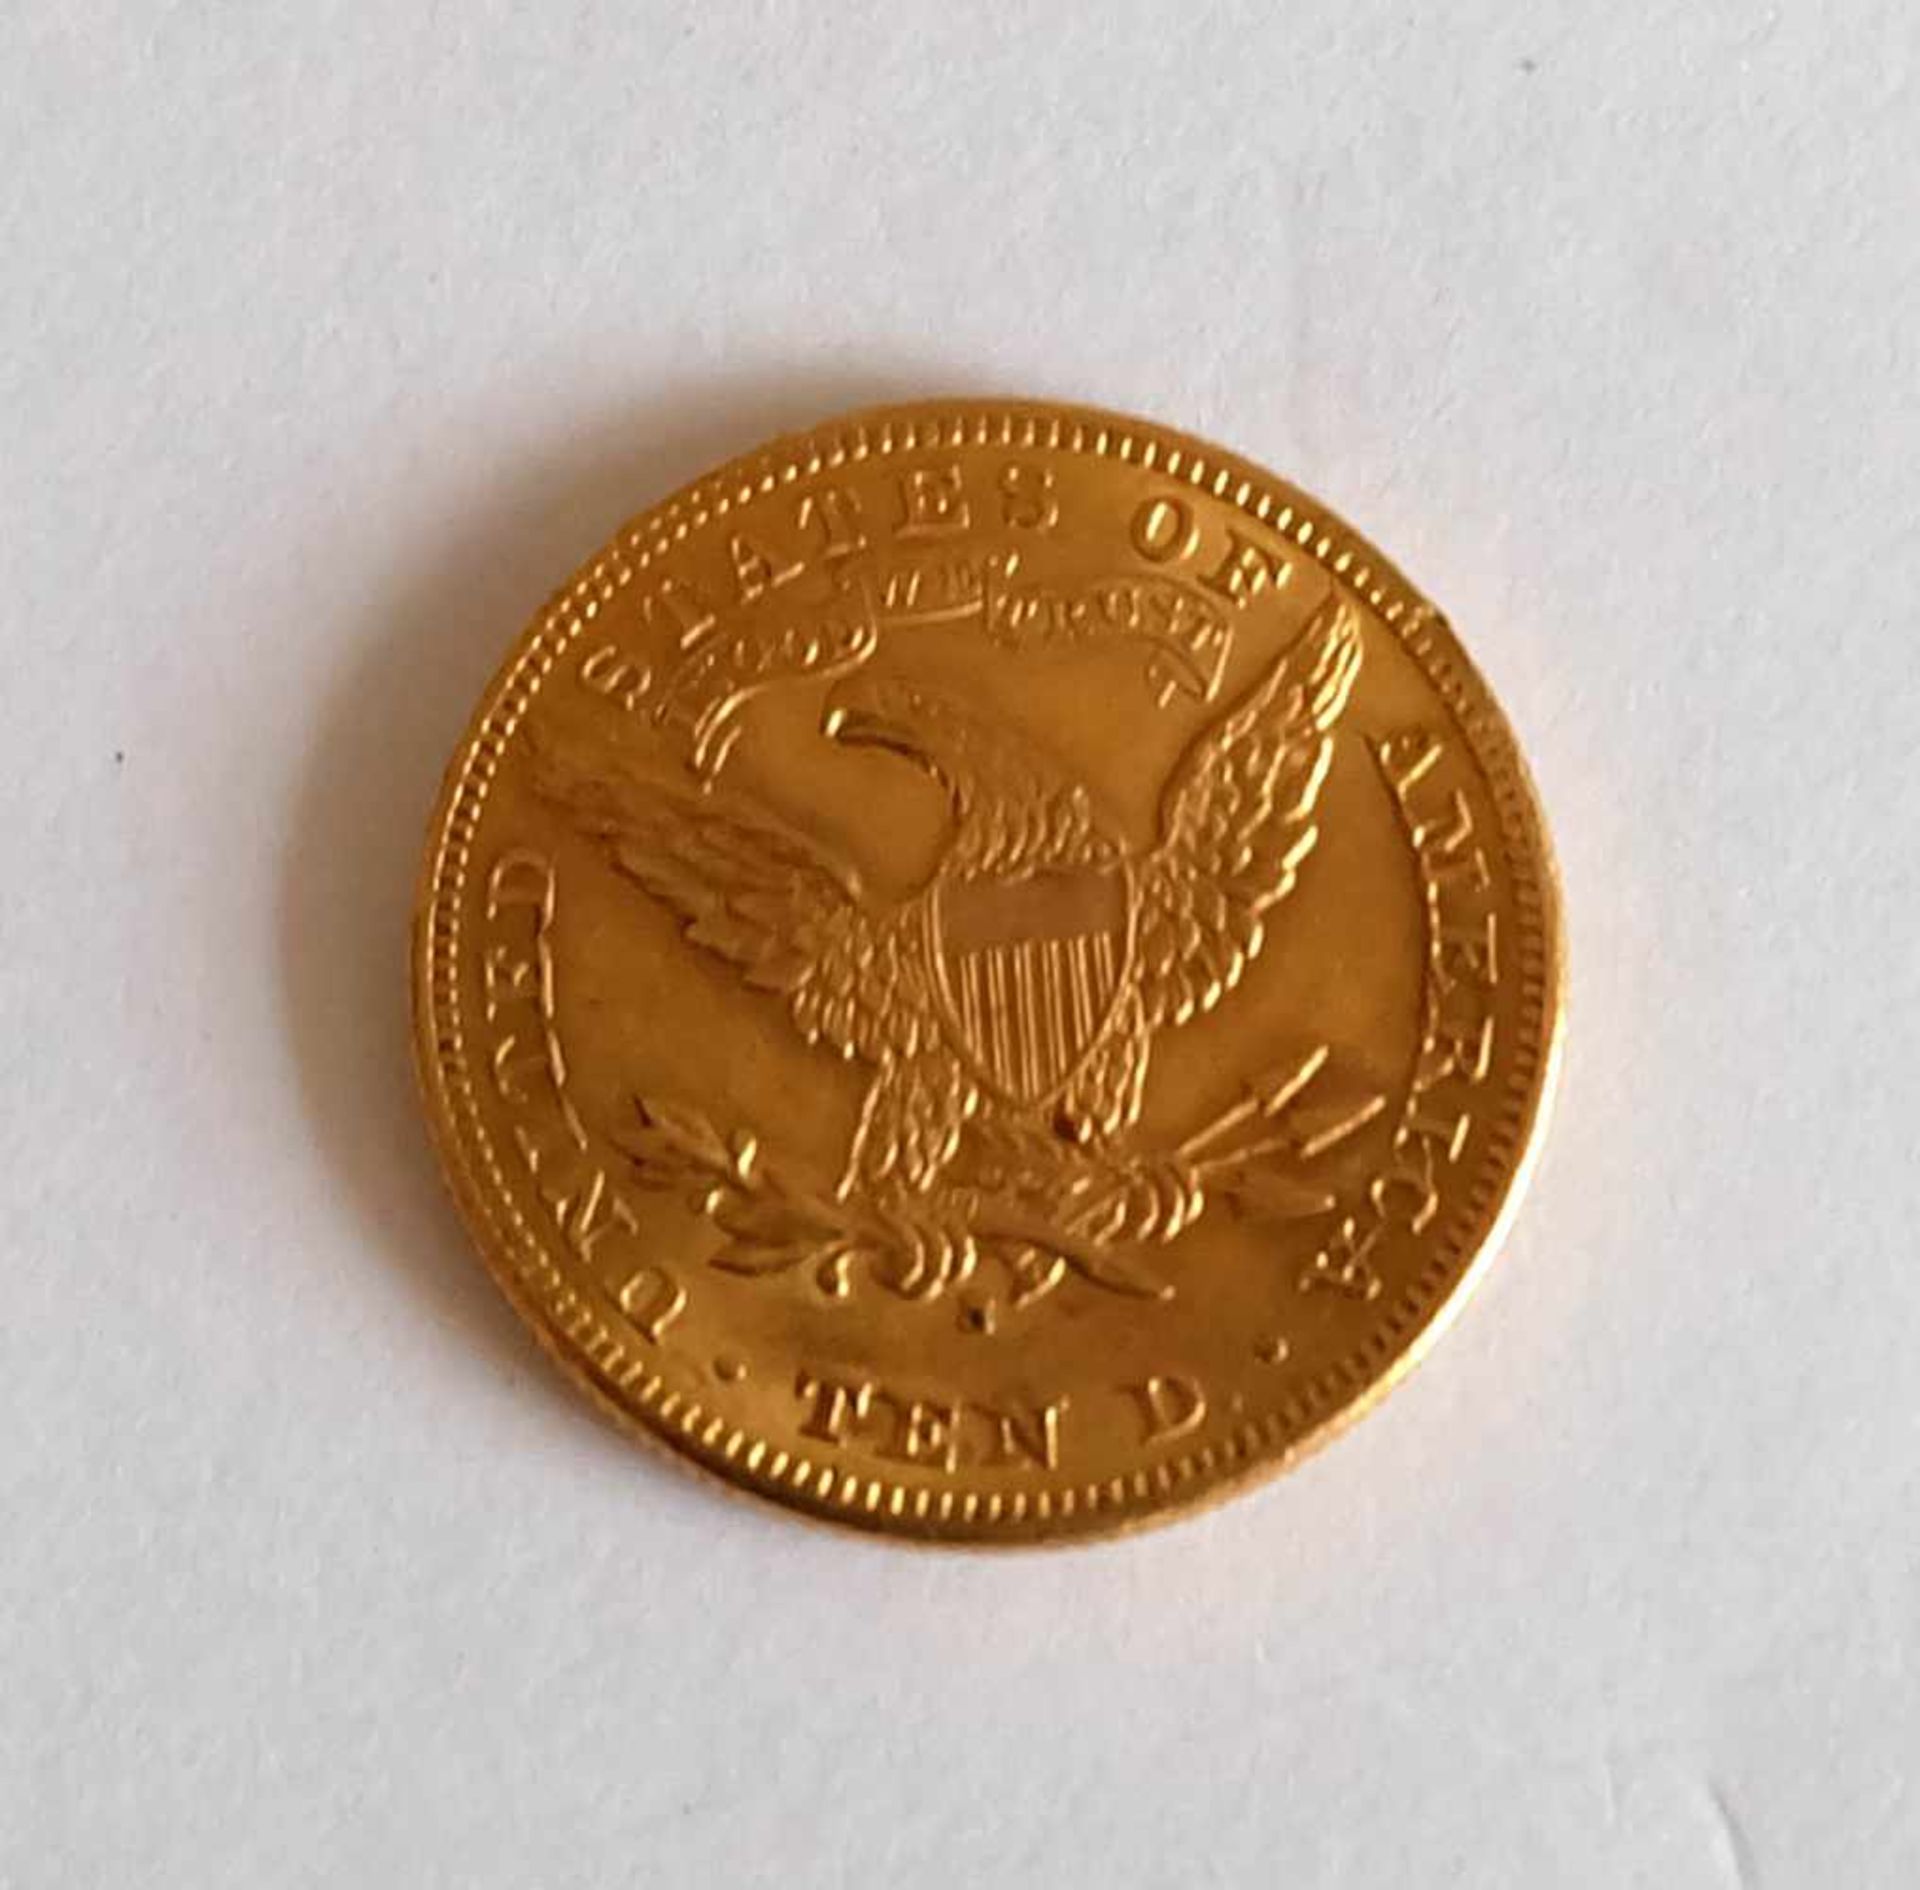 USA, 10 $, 1899, Eagle/ Liberty, 16,71g 900er-Gold, Dm 27 mm